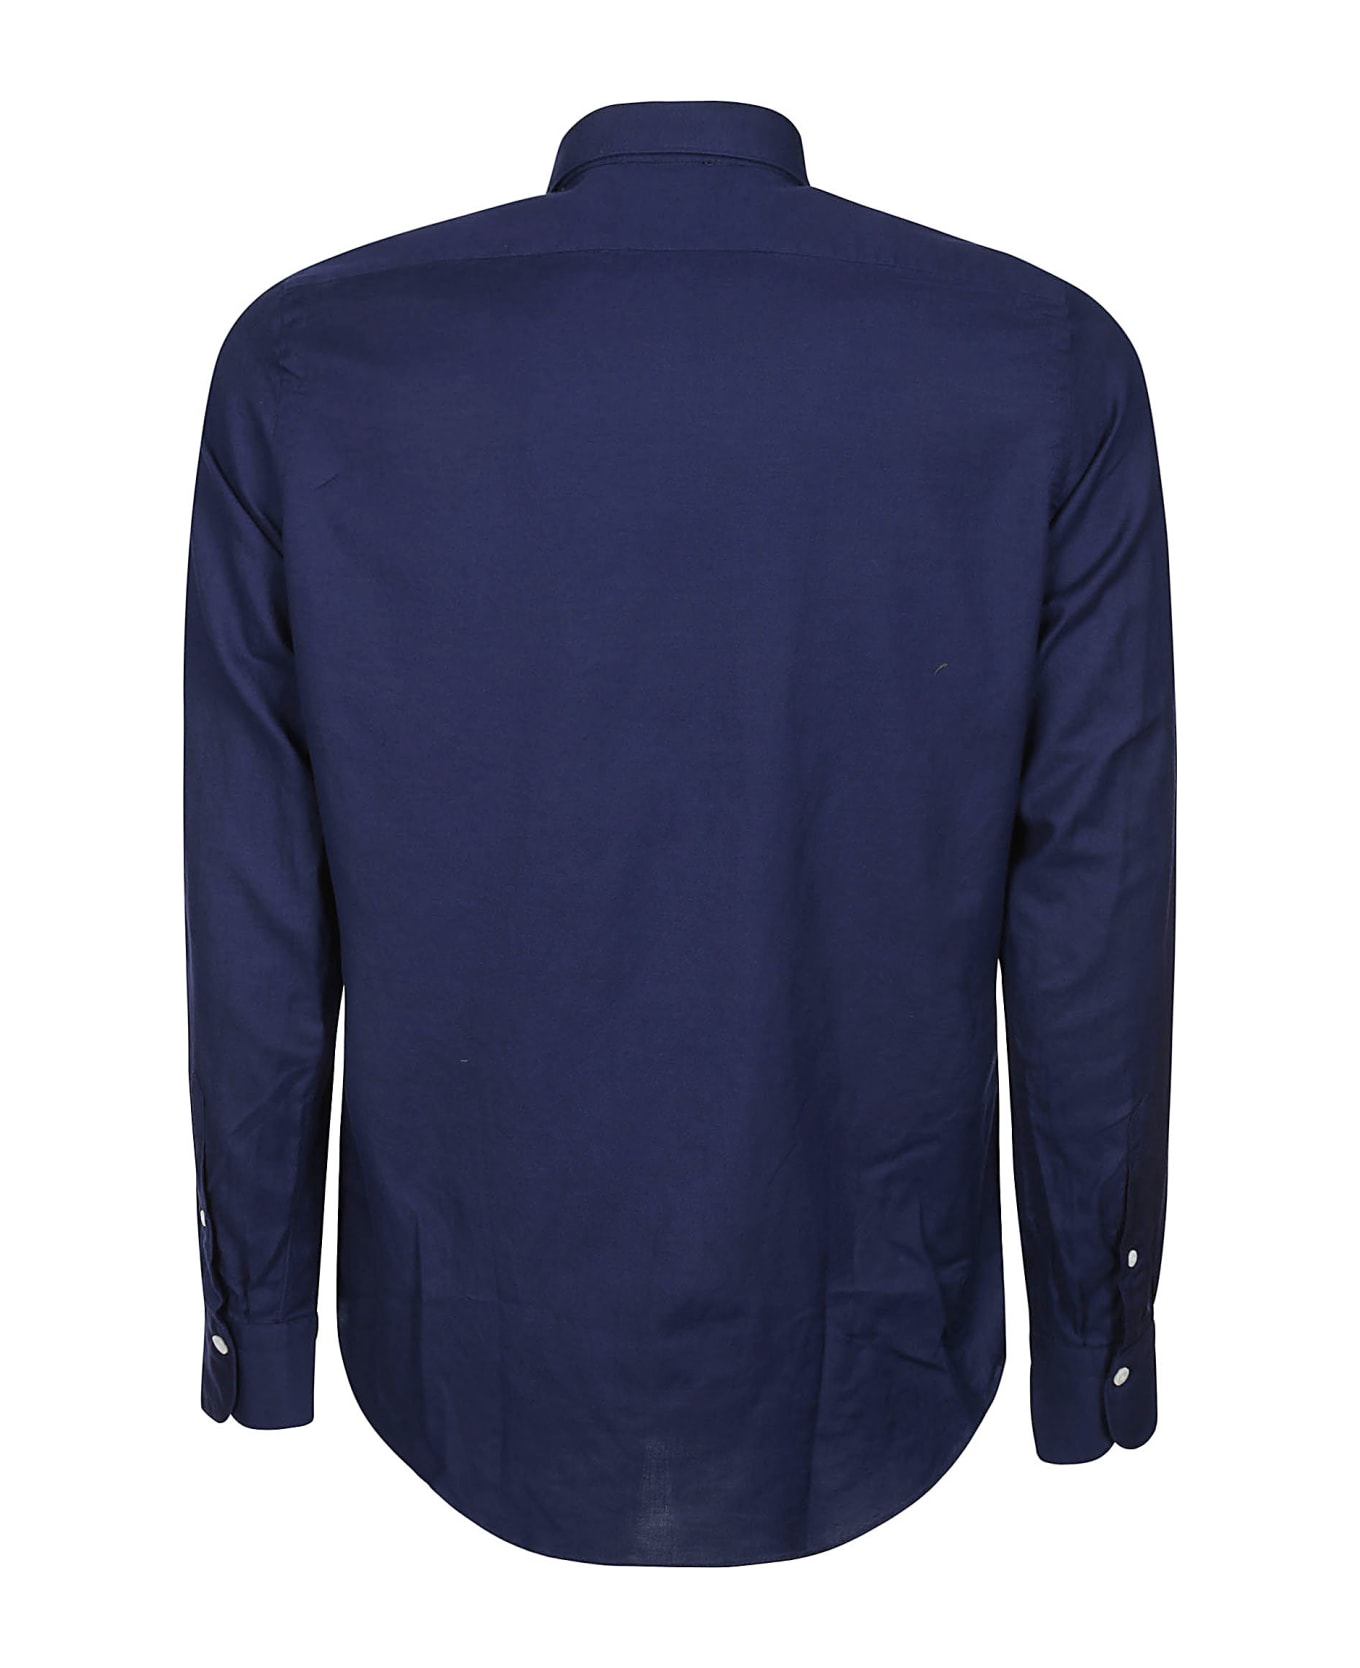 Finamore Shirt - Blue シャツ